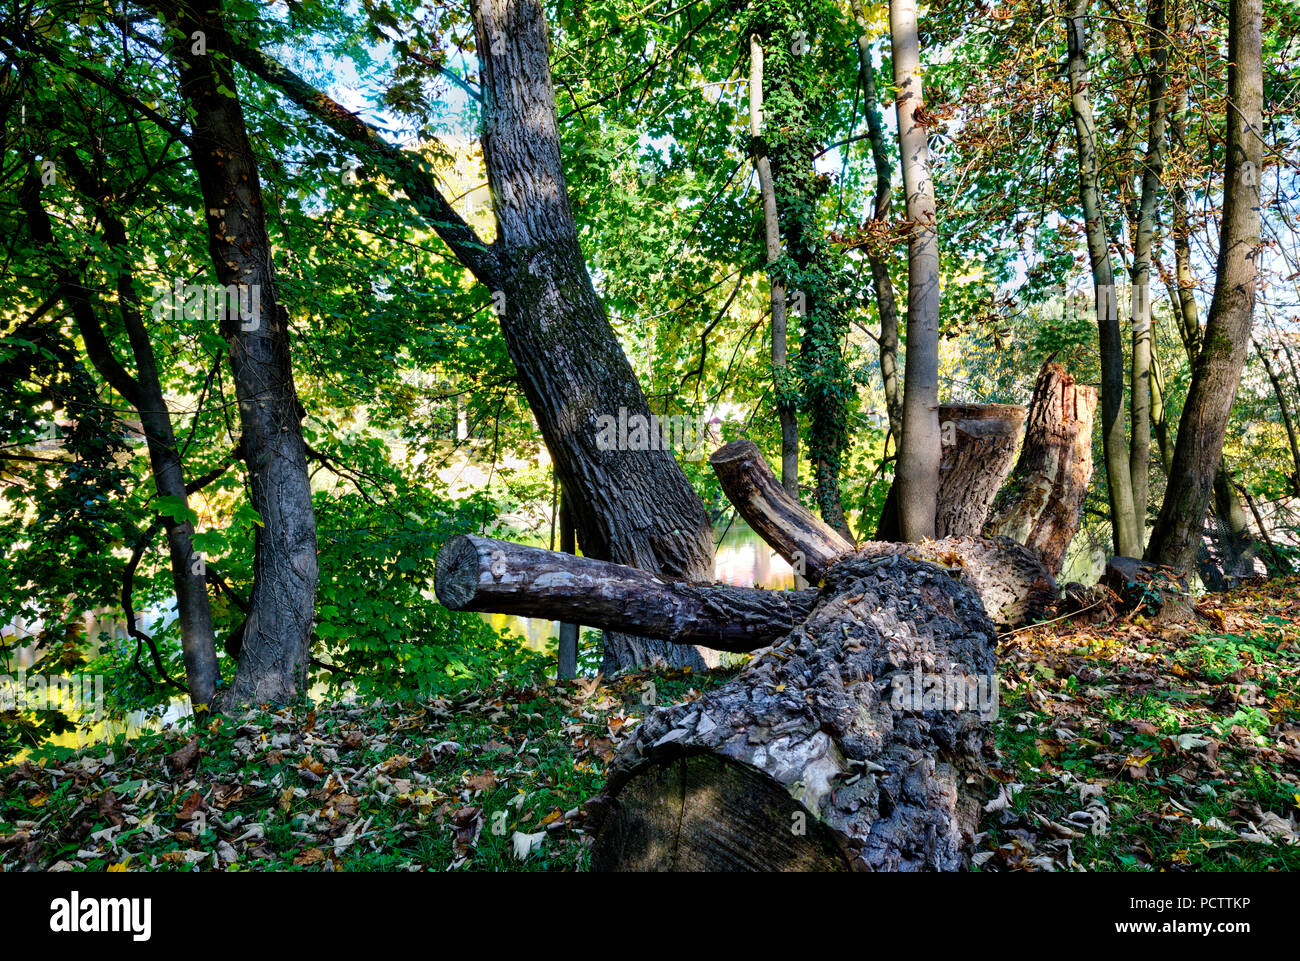 felled tree on the Jahn Island, Idyll, autumn, Regensburg, Upper Palatinate, Bavaria, Germany, Europe Stock Photo